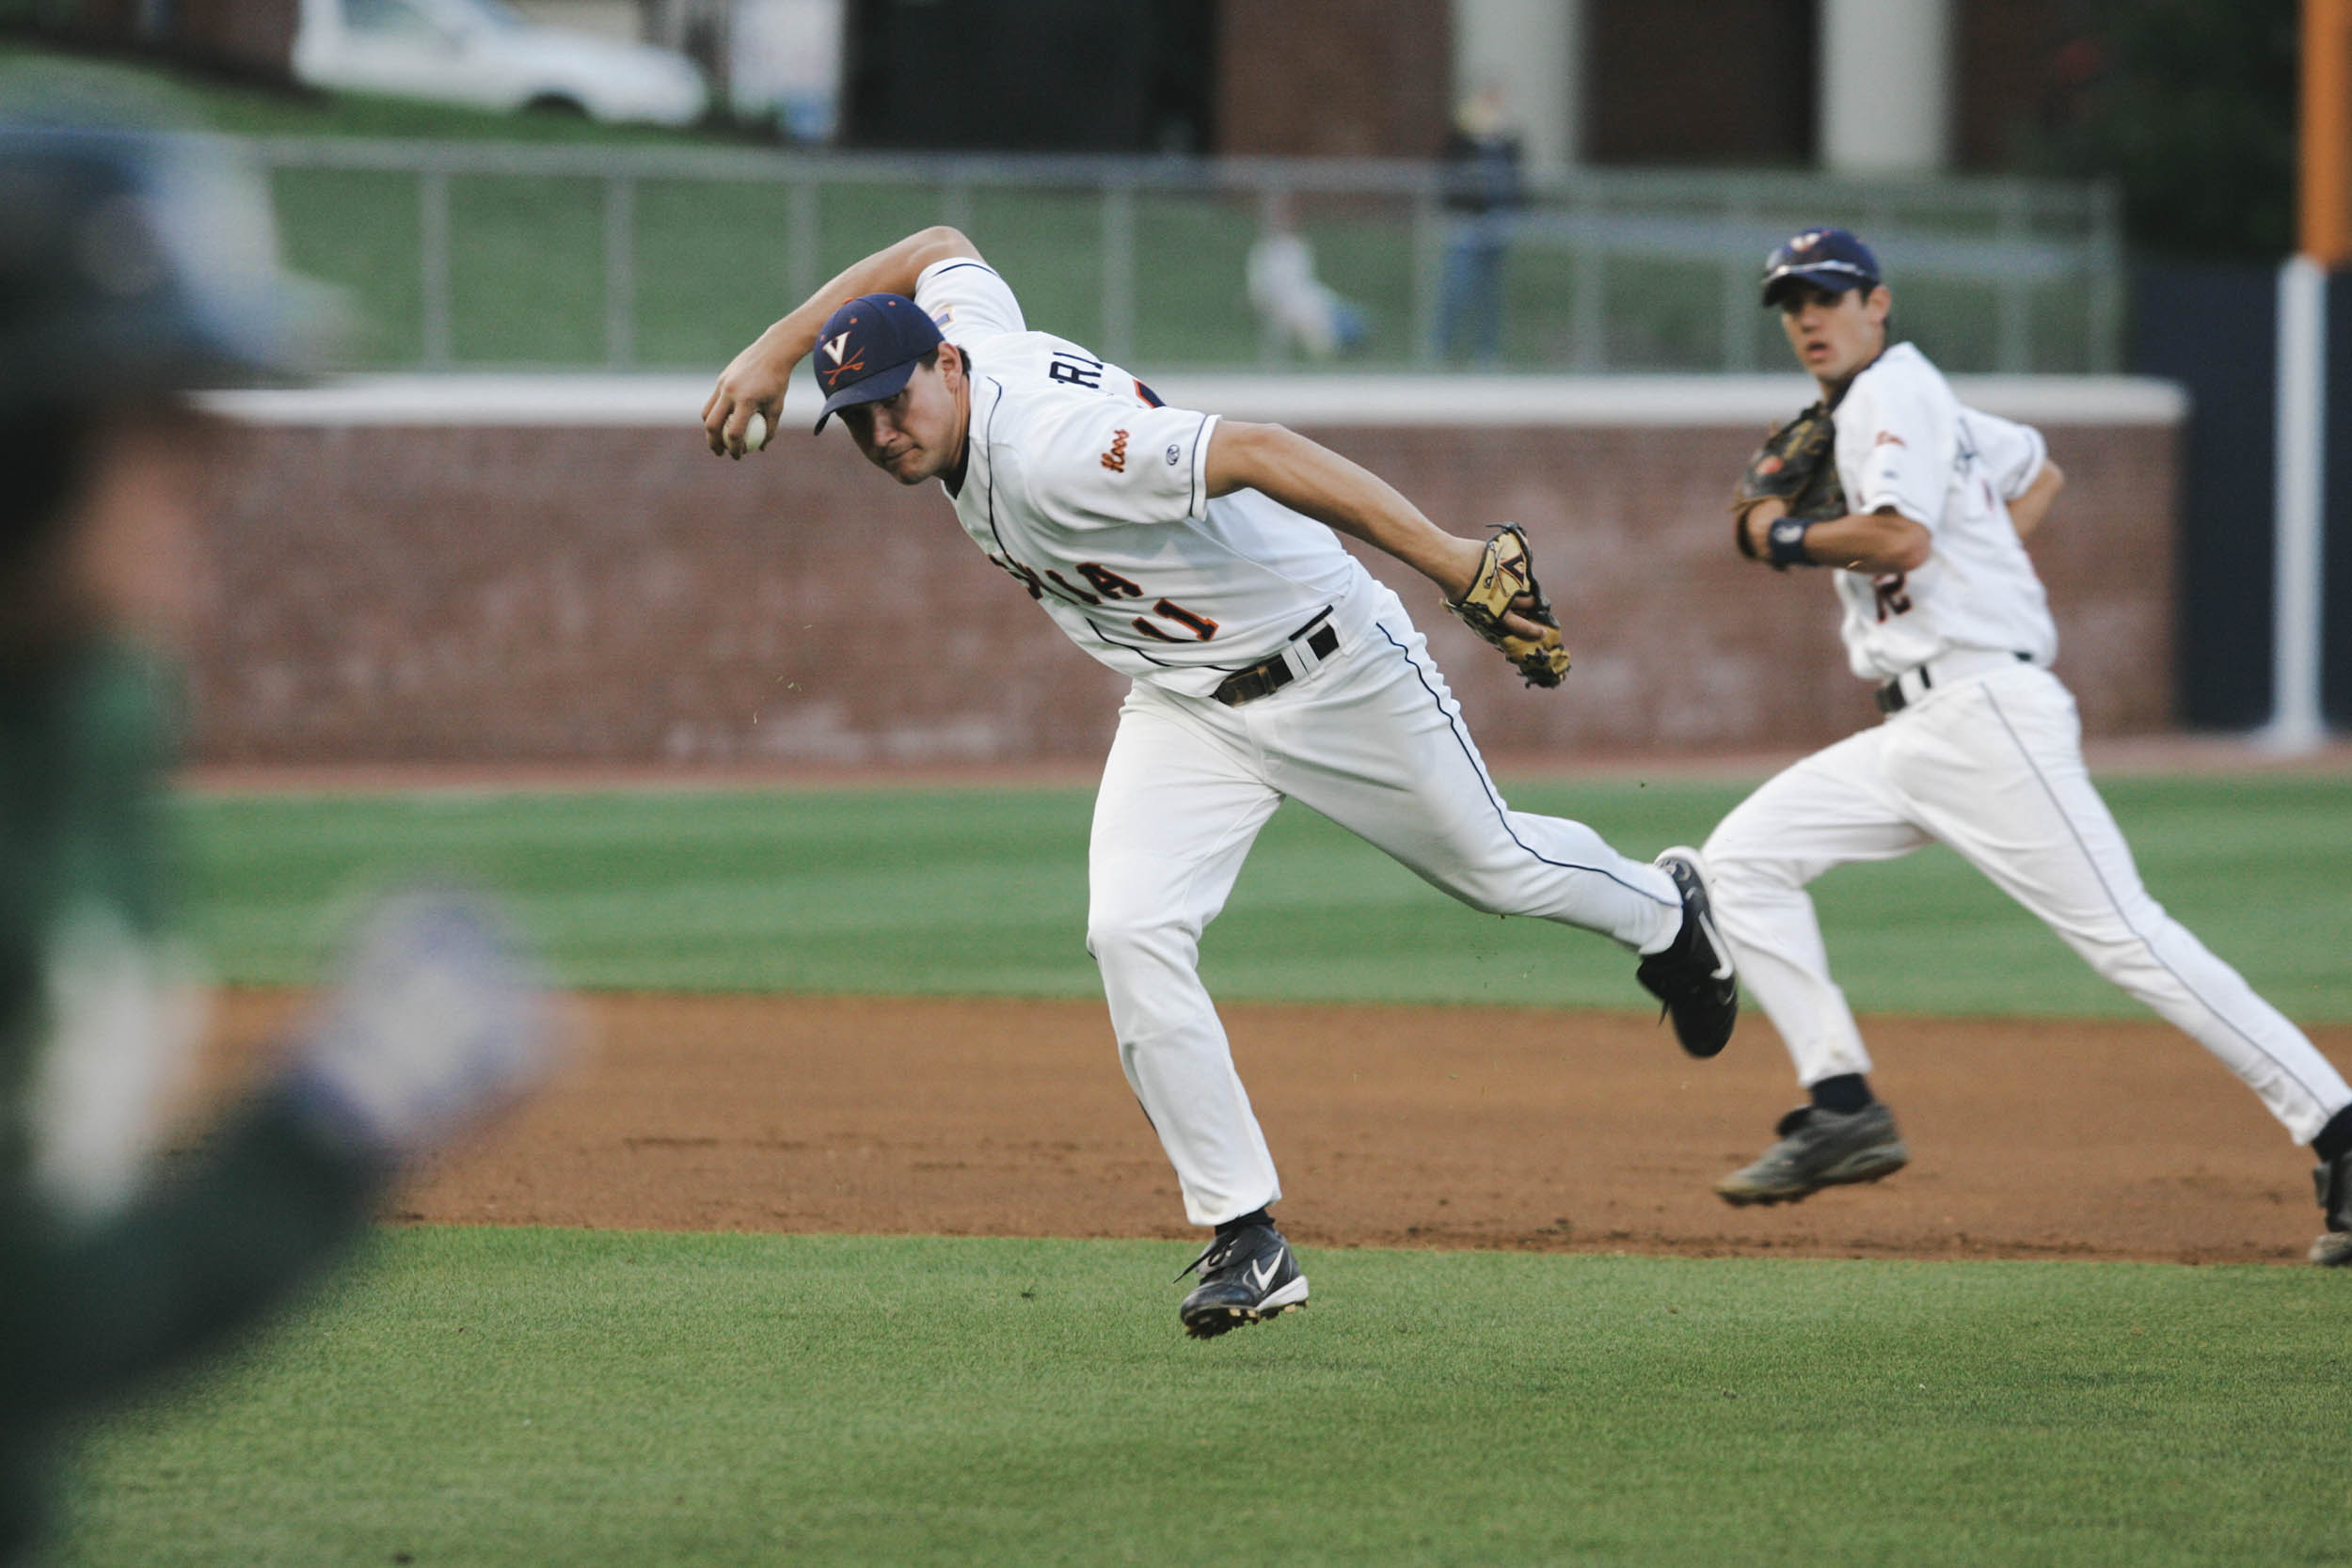 UVA baseball pitcher pitching a ball and an in fielder running